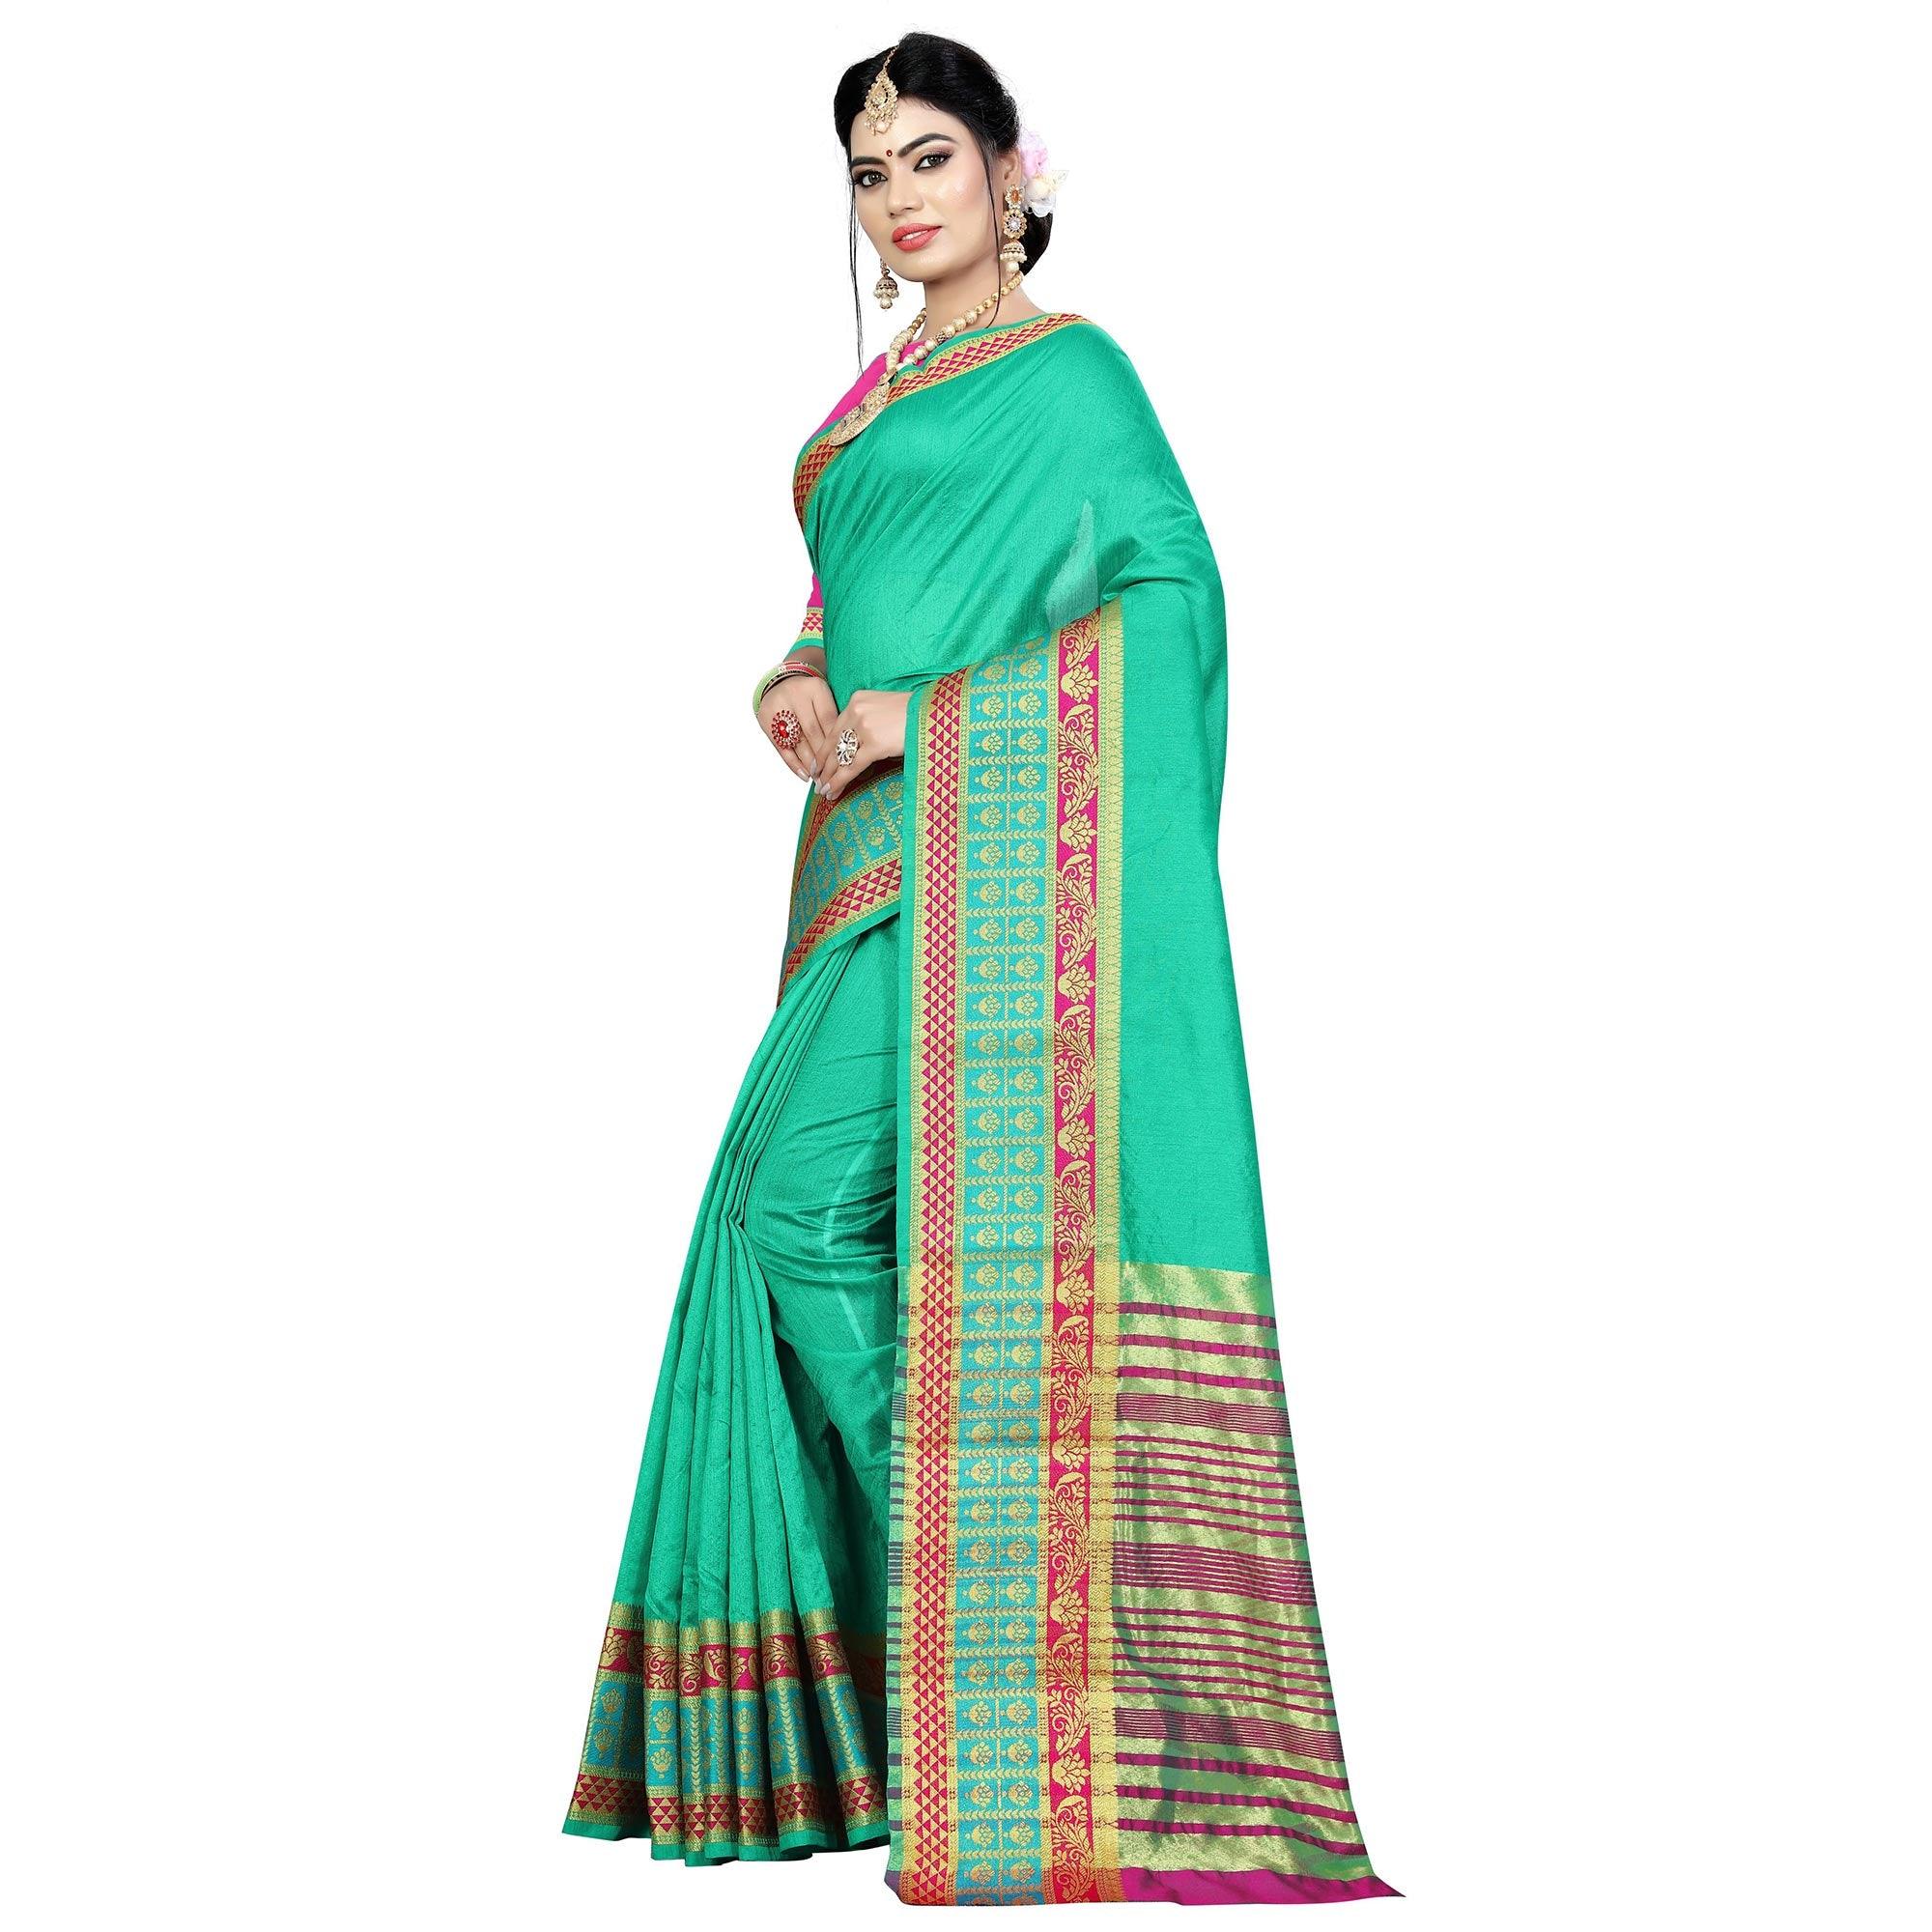 Dazzling Turquoise Green Colored Festive Wear Woven Art Silk Saree - Peachmode